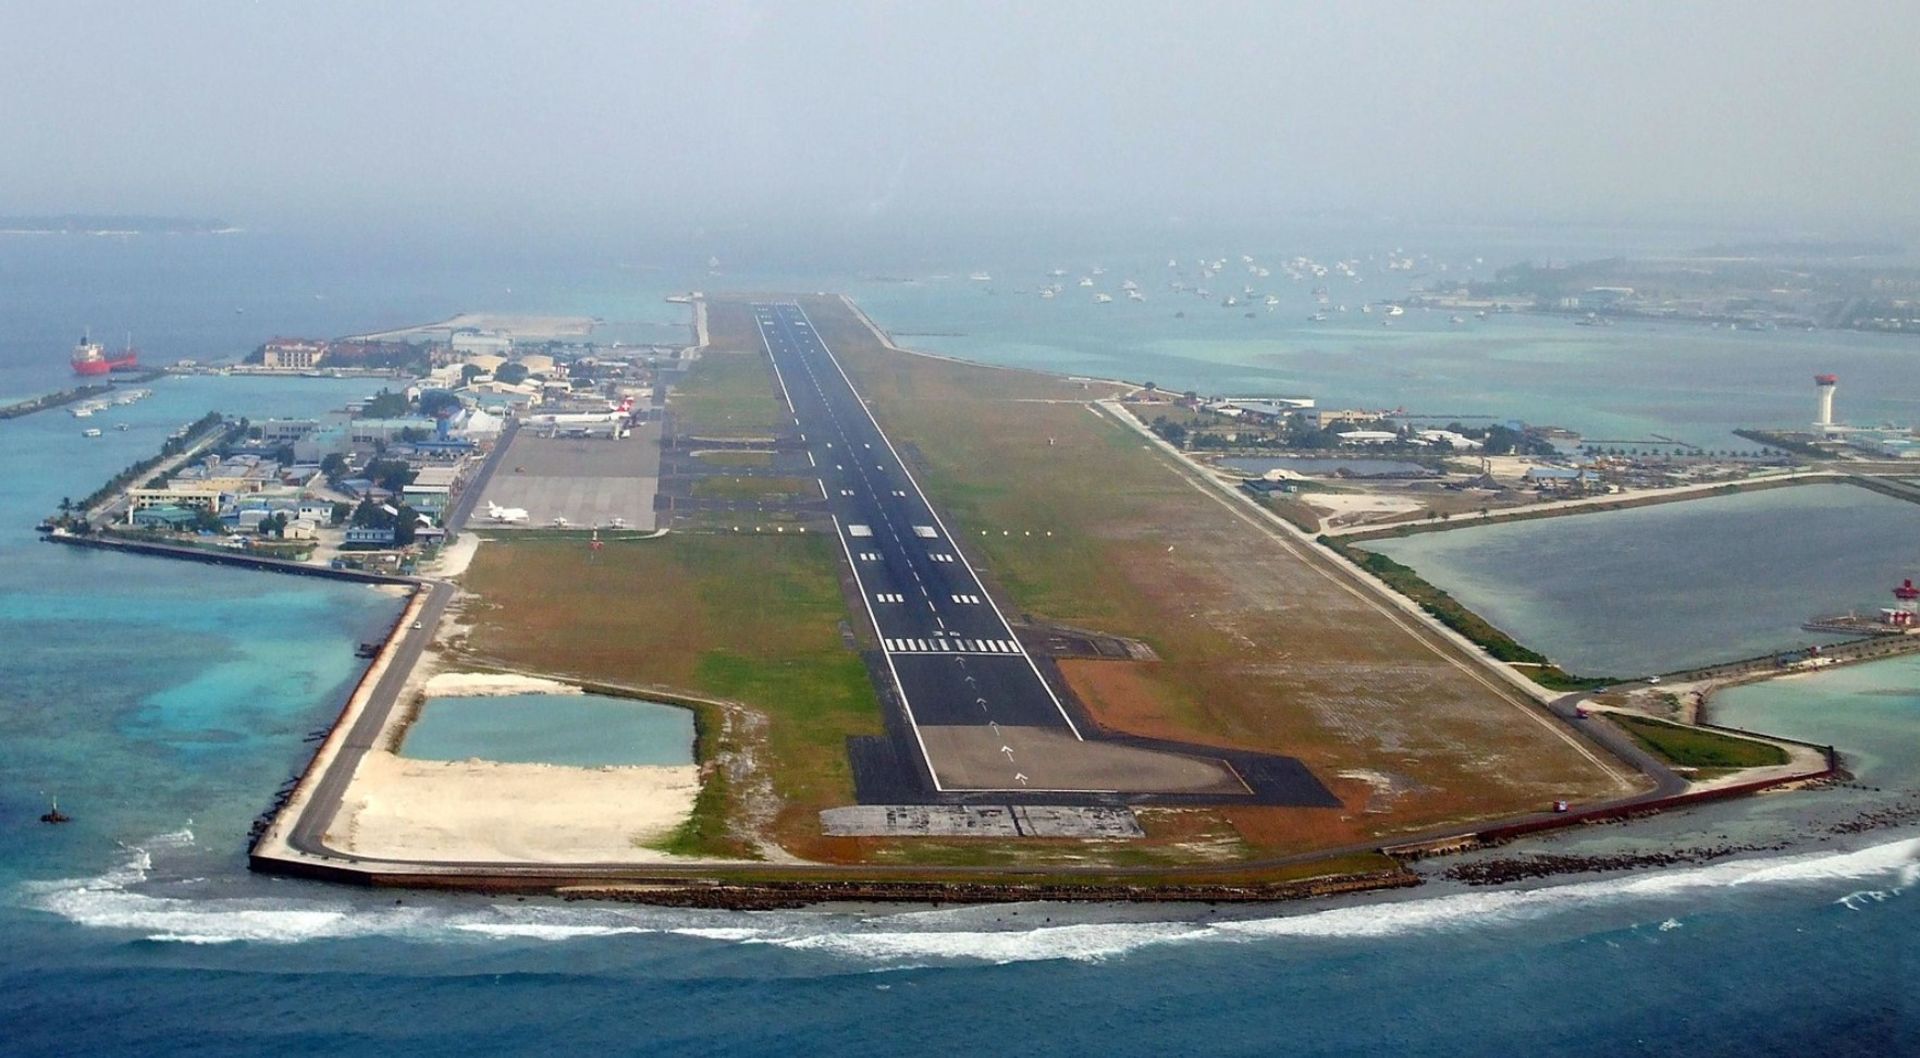 Malé Airport, Maldives